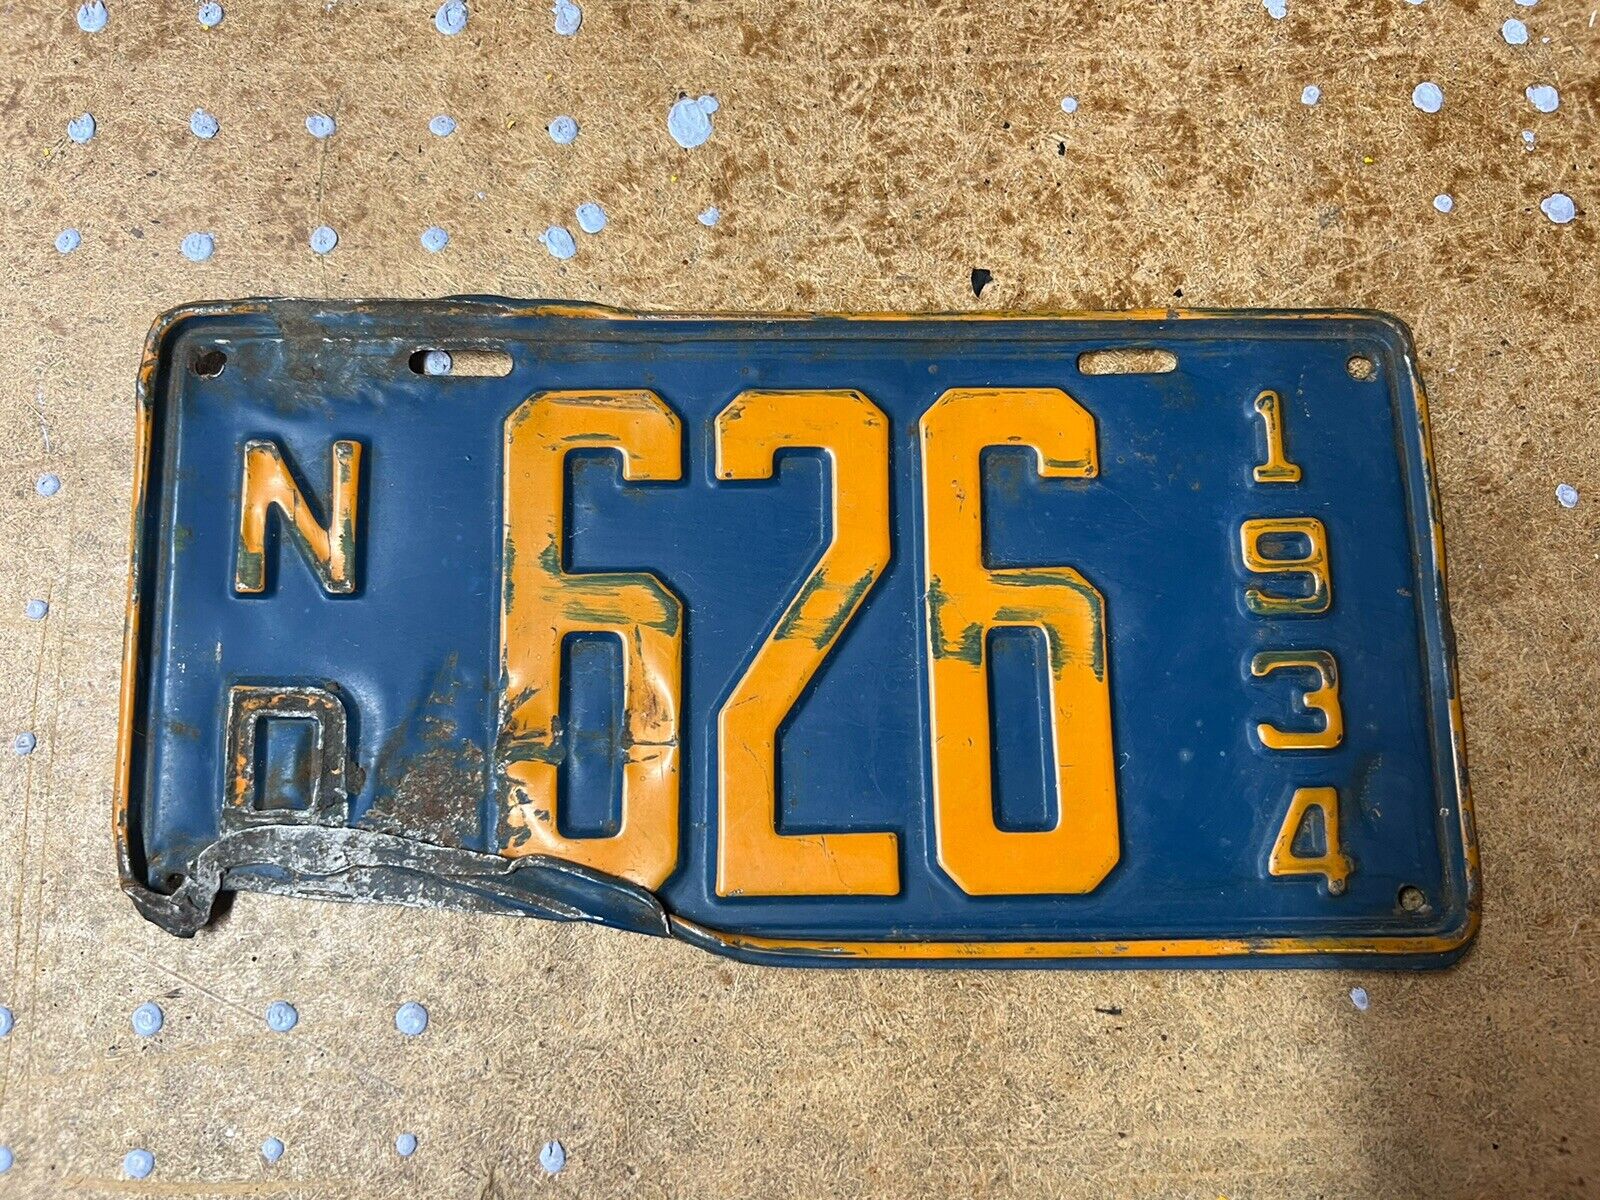 1934 North Dakota Truck license plate Low digit 3 digit